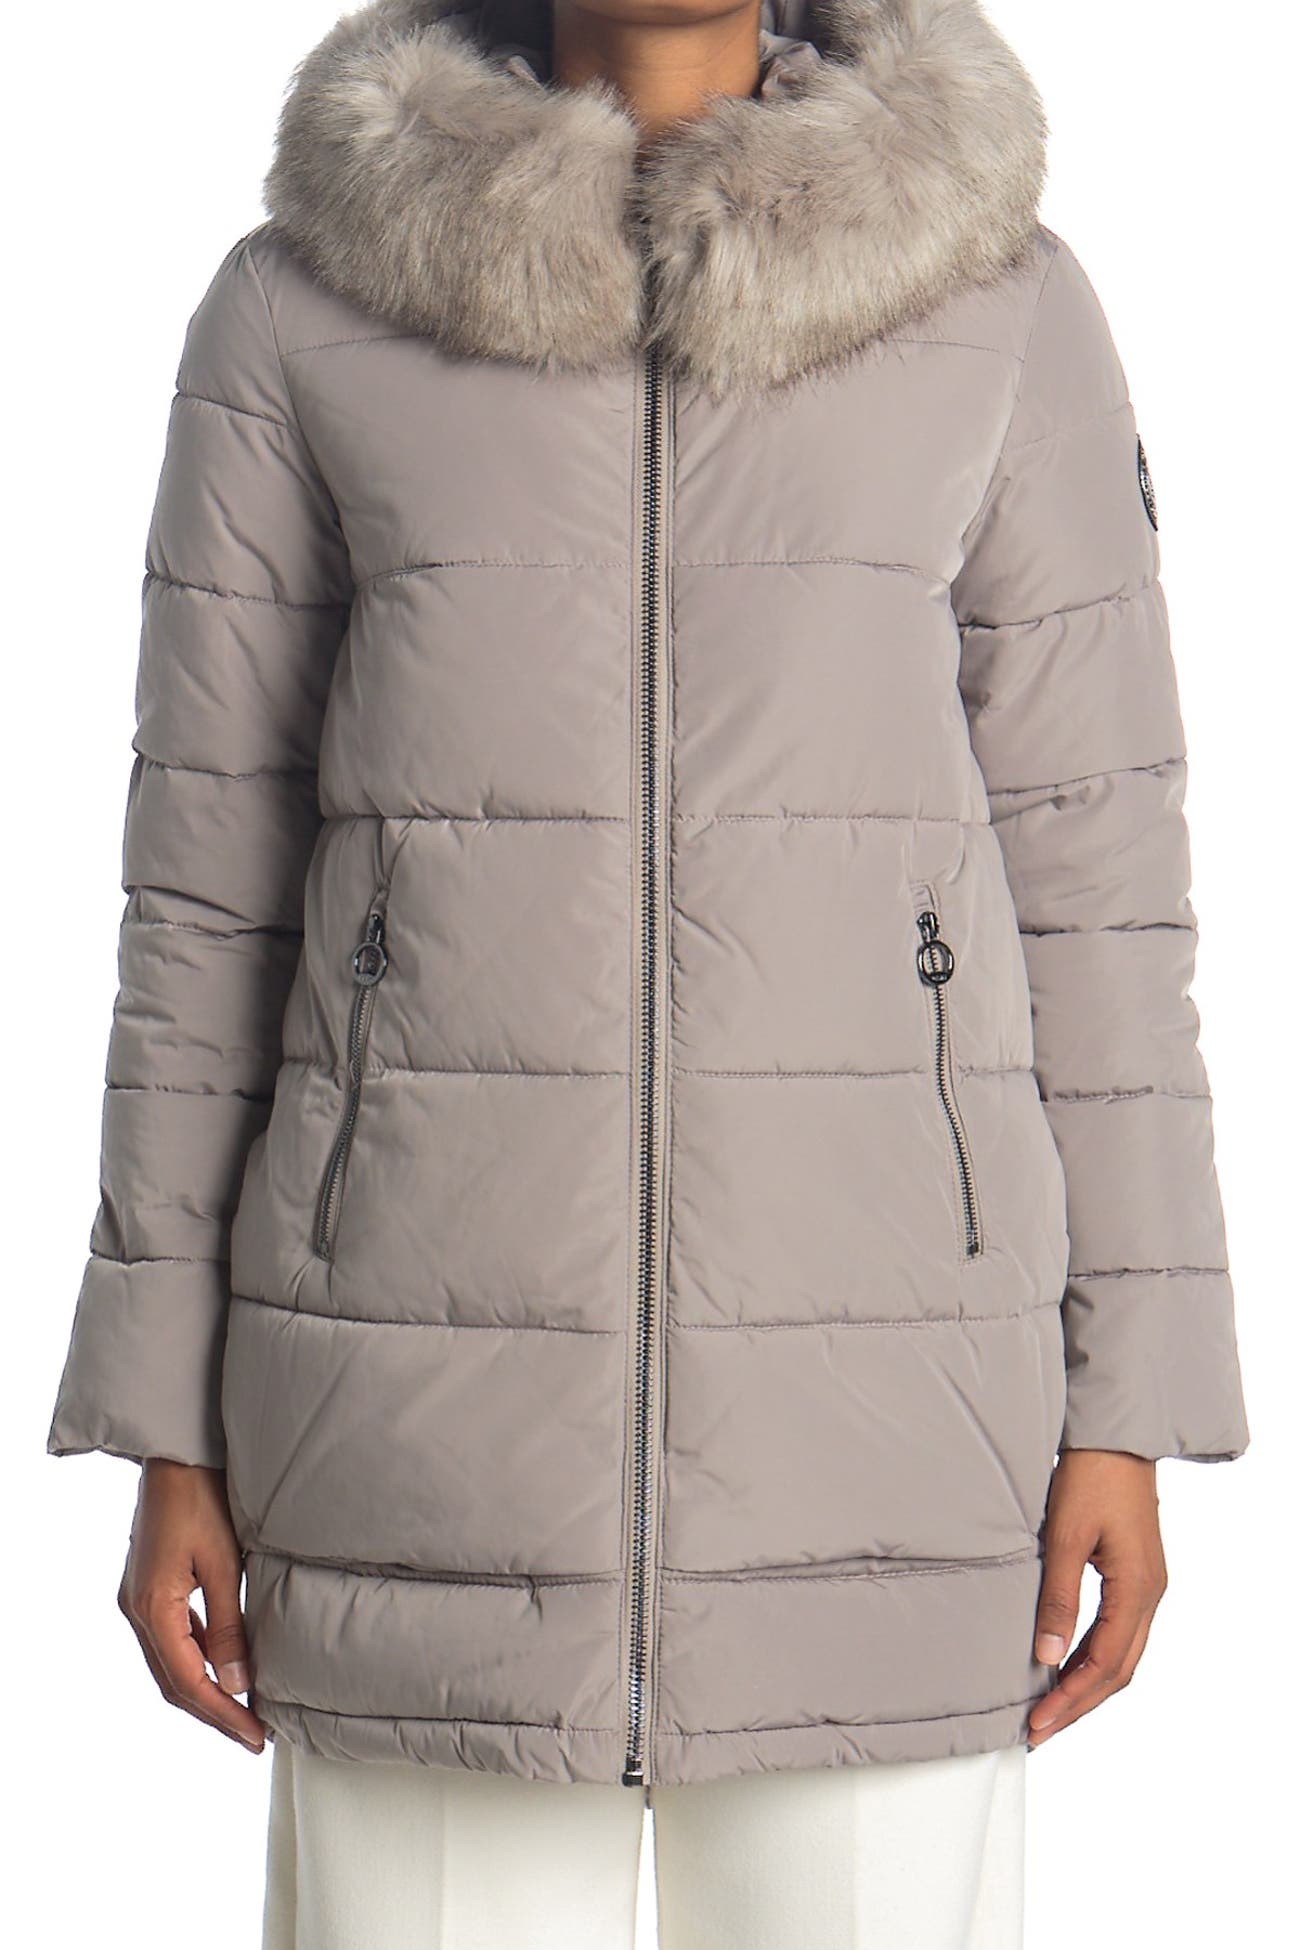 DKNY | Zip Front Coat with Faux Fur Hood | Nordstrom Rack